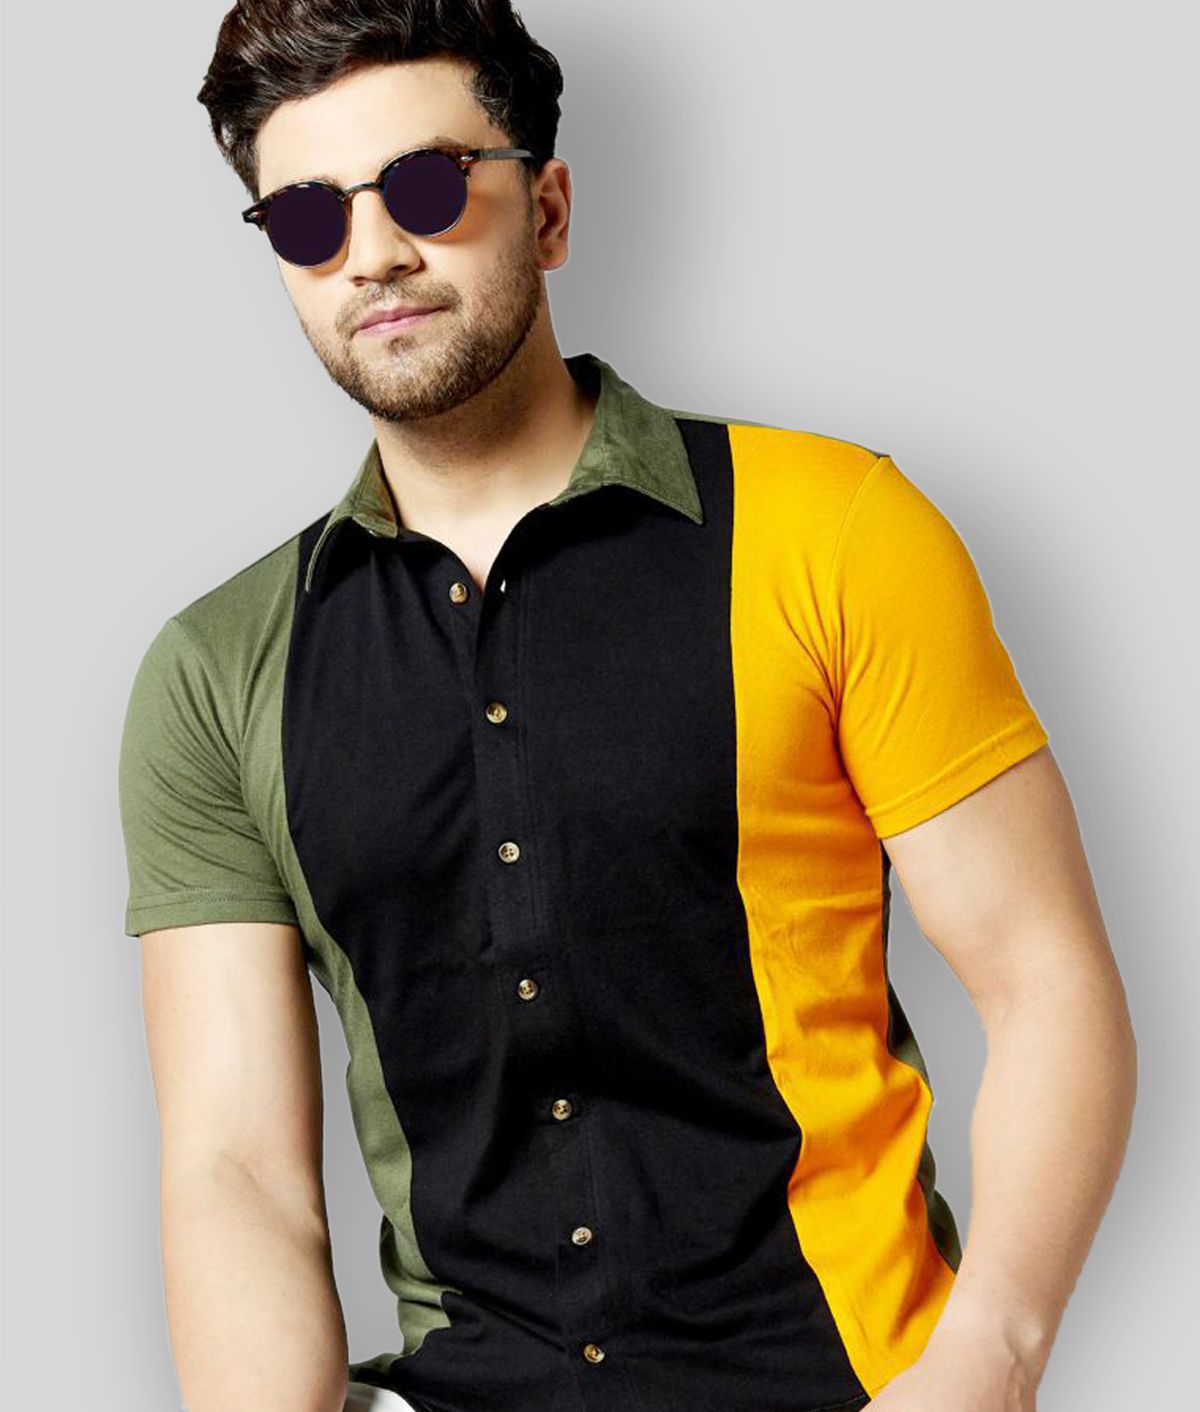     			GESPO - Multicolor Cotton Blend Regular Fit Men's Casual Shirt (Pack of 1)